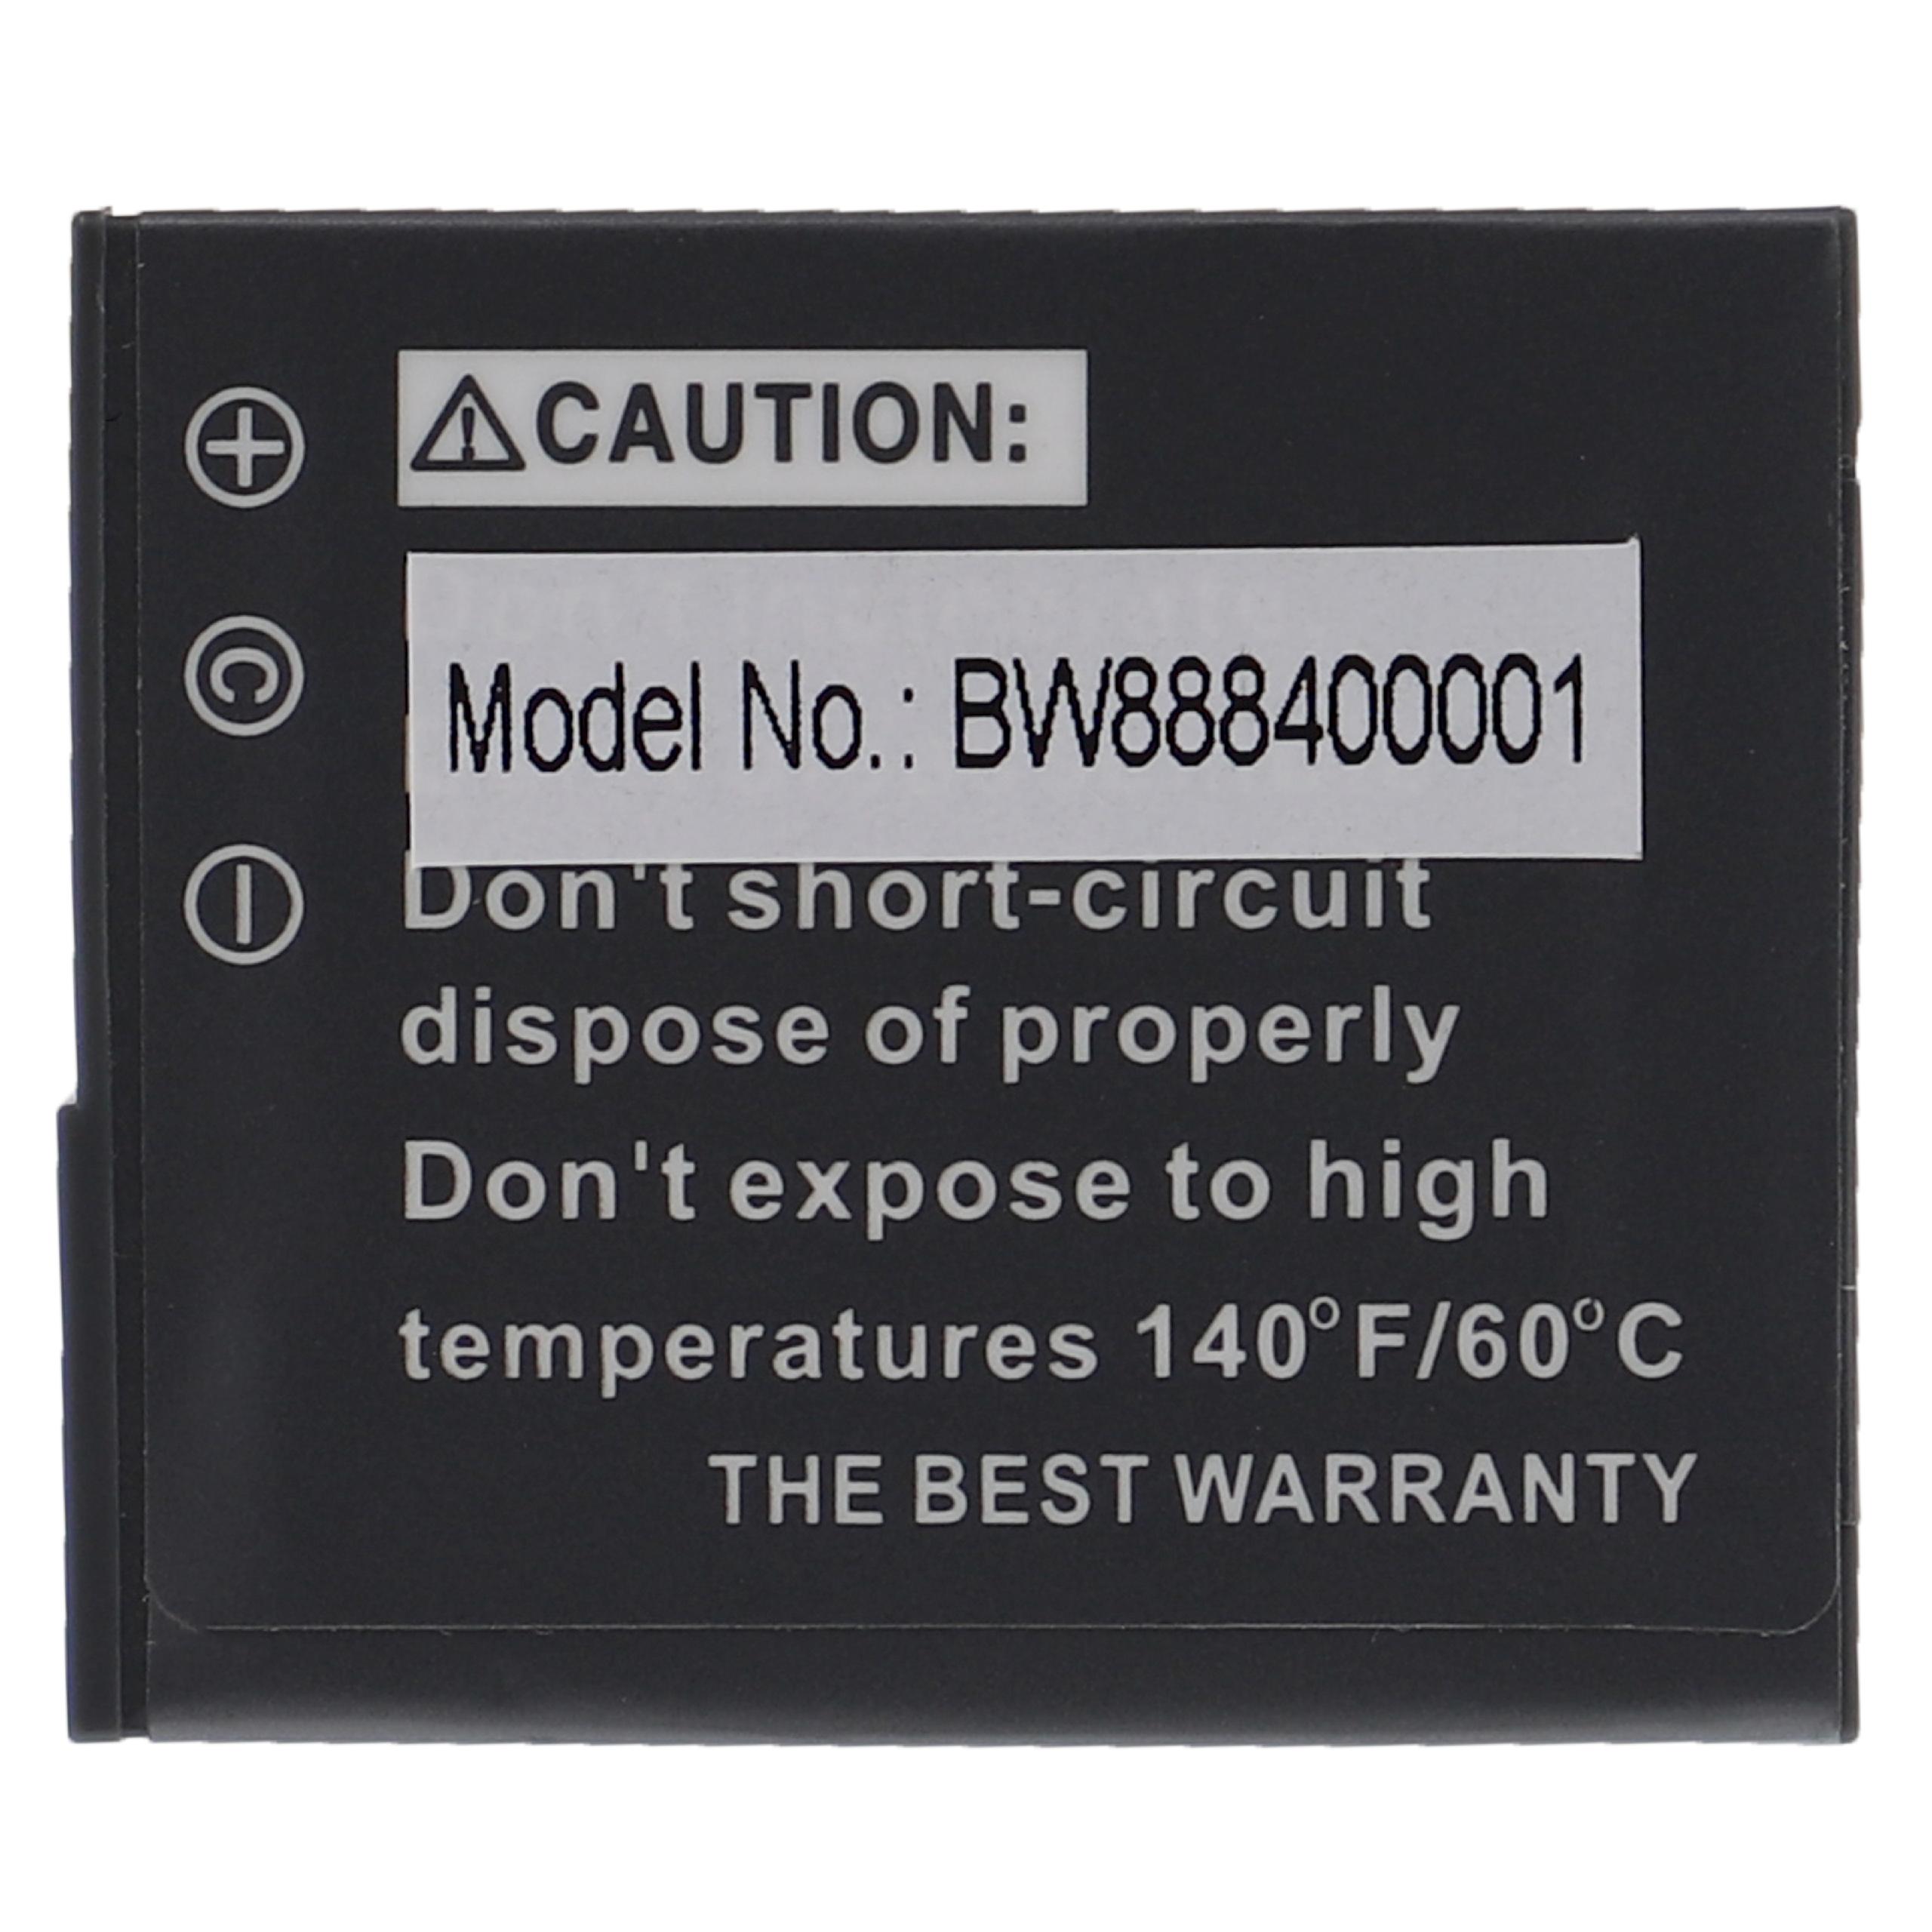 Battery Replacement for Sony NP-BG1, NP-FG1 - 1020mAh, 3.6V, Li-Ion